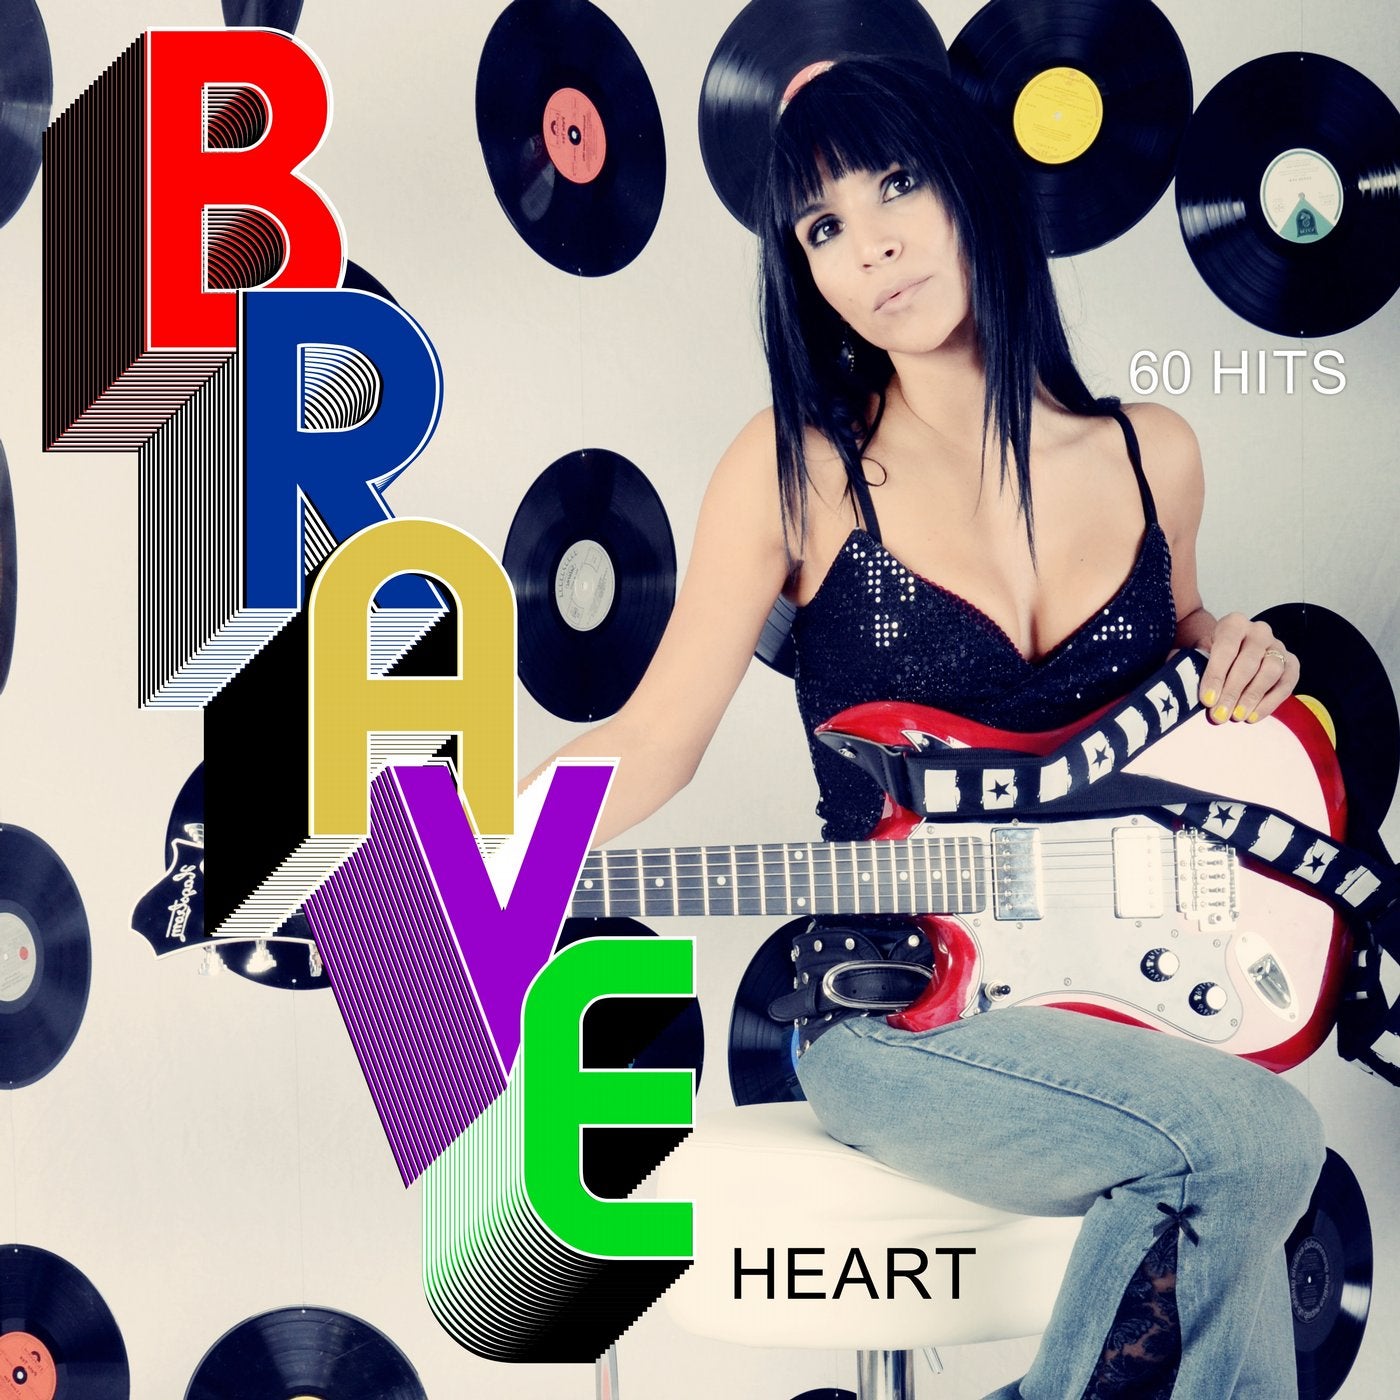 Brave Heart Hits, 60 Tracks